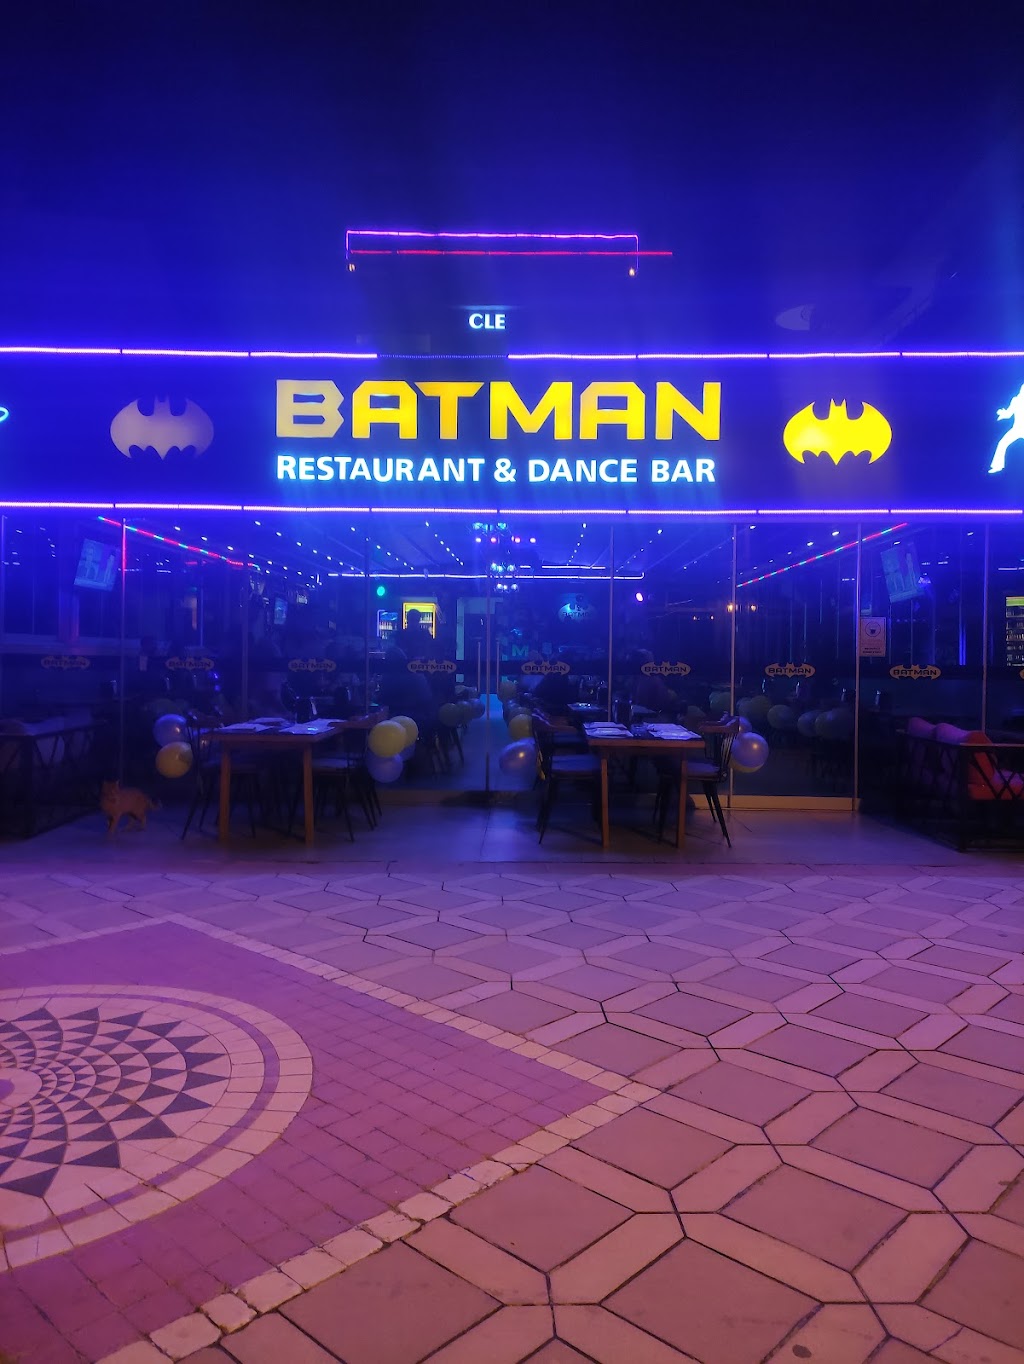 BATMAN Restaurant & Dance Bar